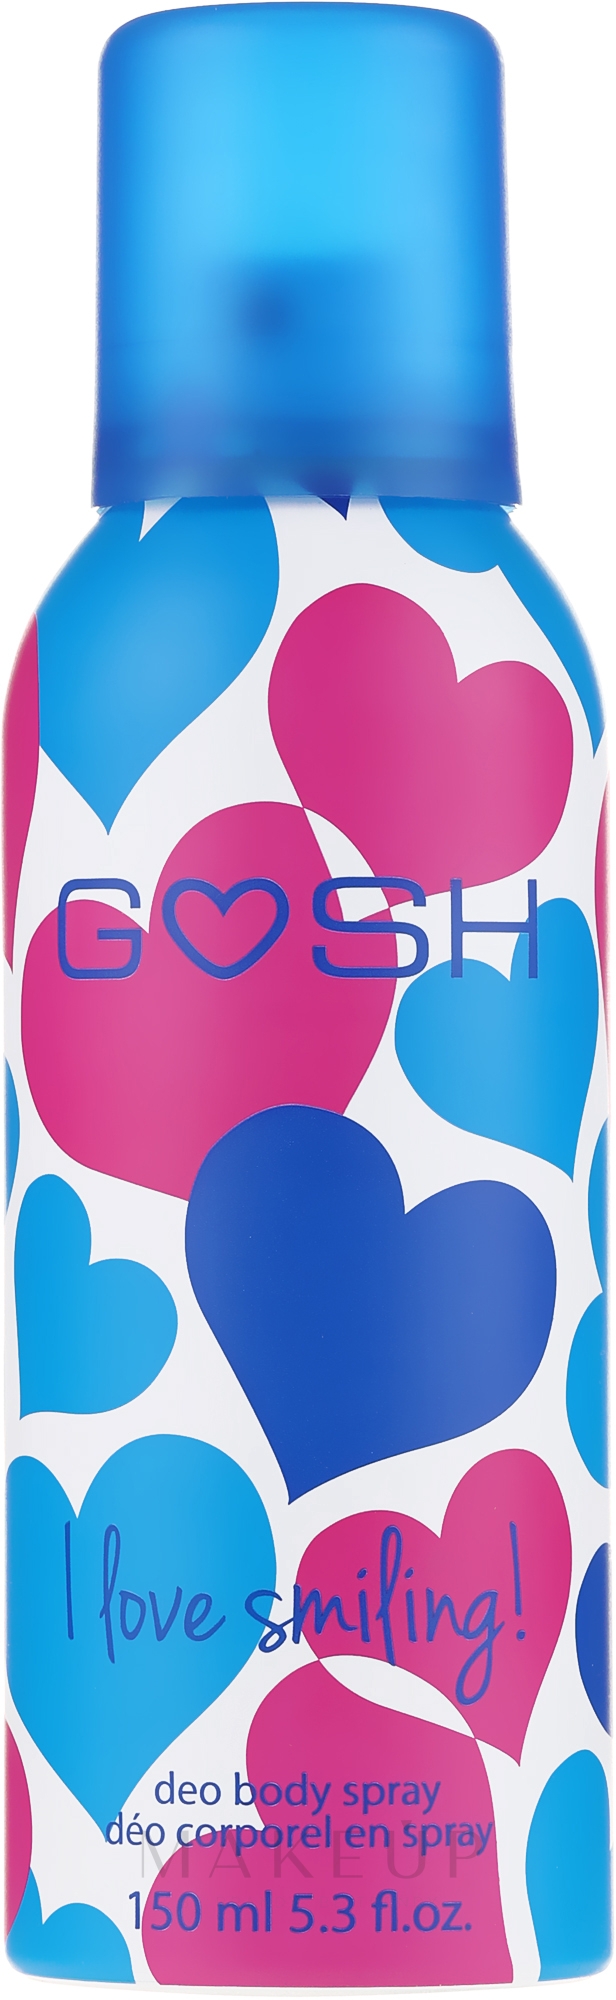 Deospray - Gosh I Love Smiling Deo Body Spray — Bild 150 ml